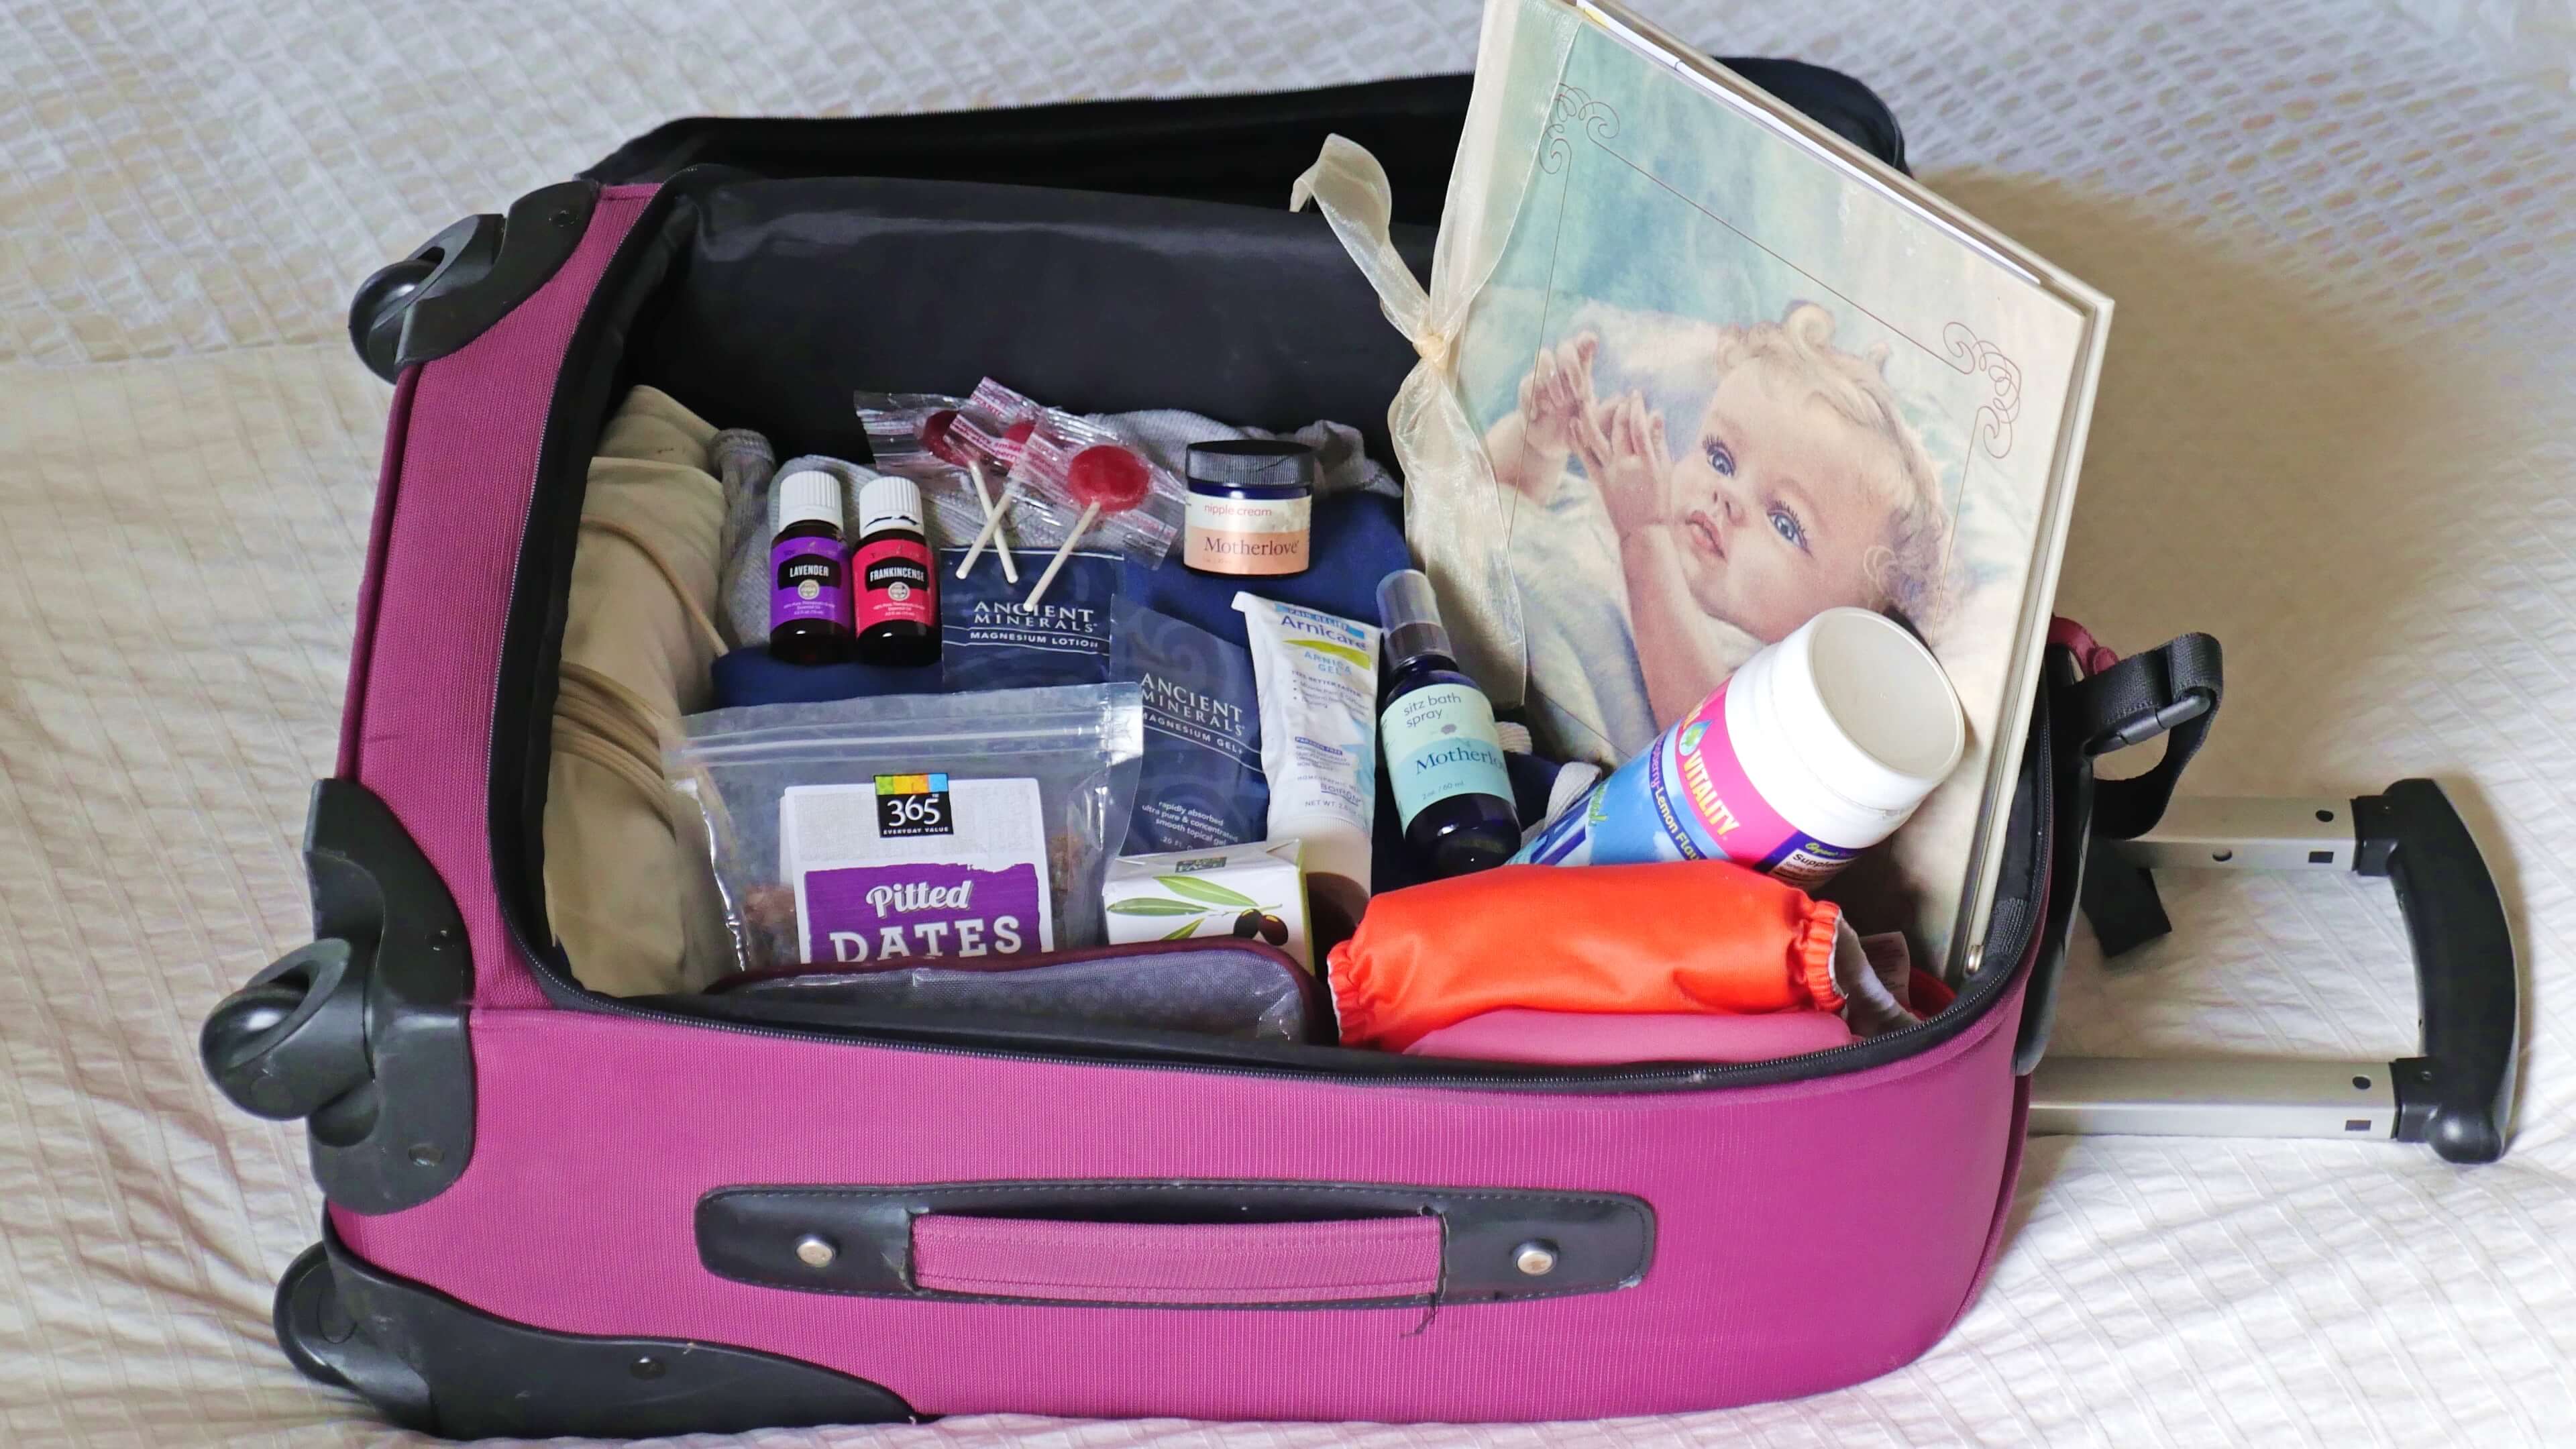 The Ultimate Checklist for Diaper Bag Essentials for Hospital